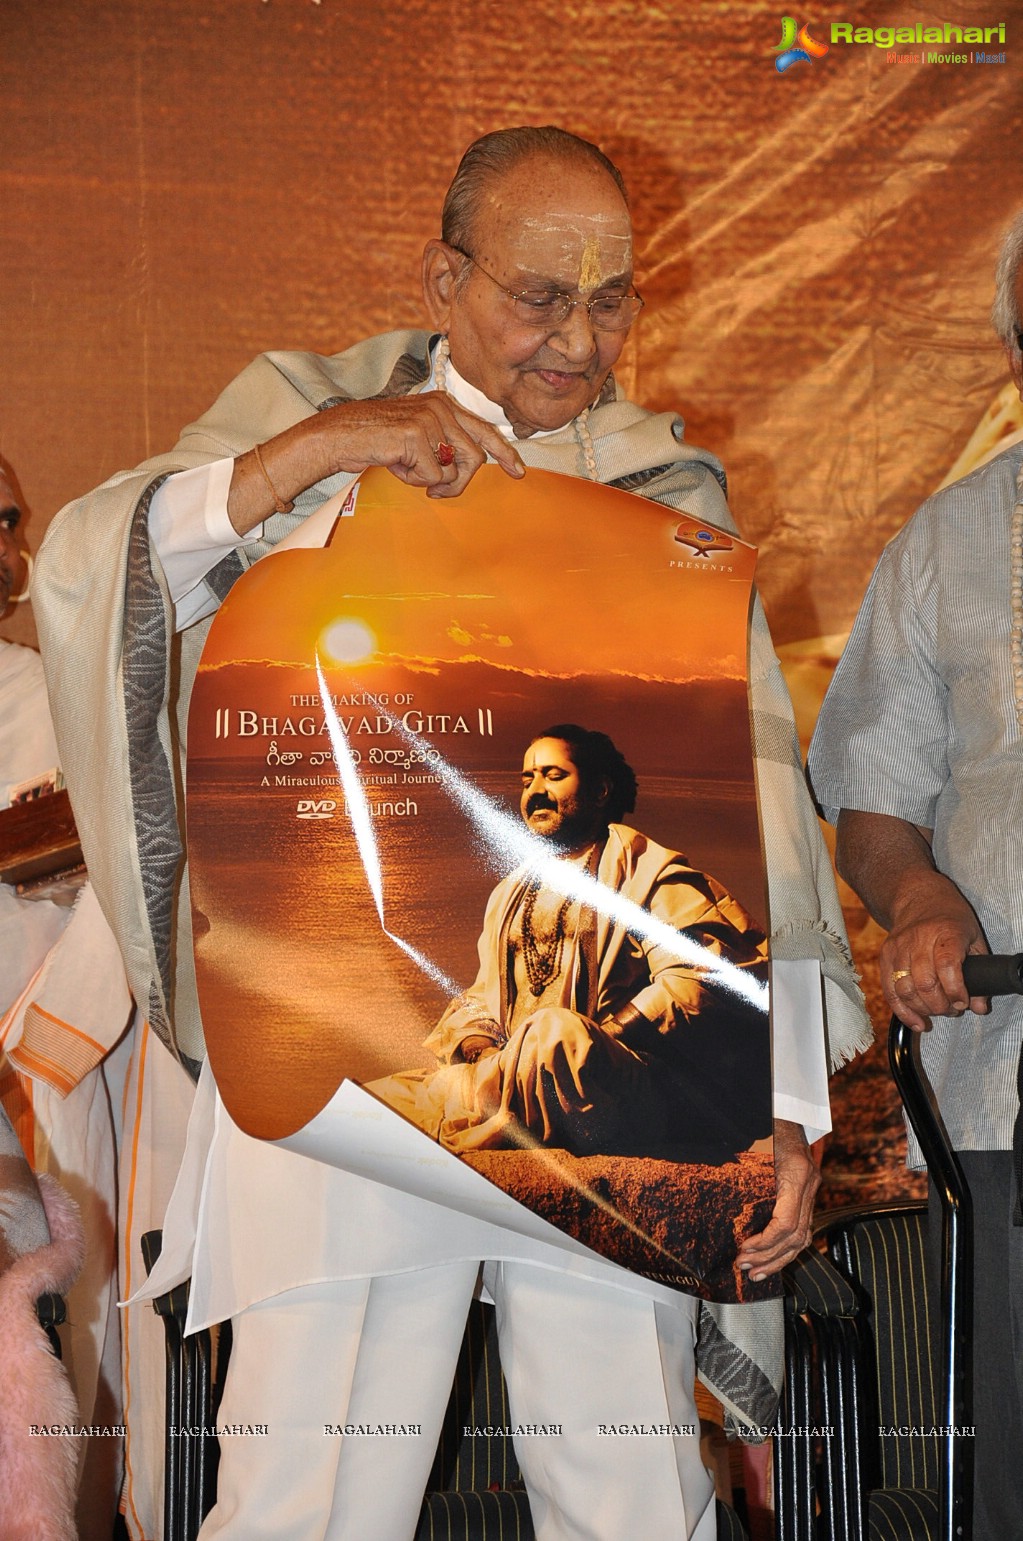 The Making of Bhagavad Gita DVD Launch